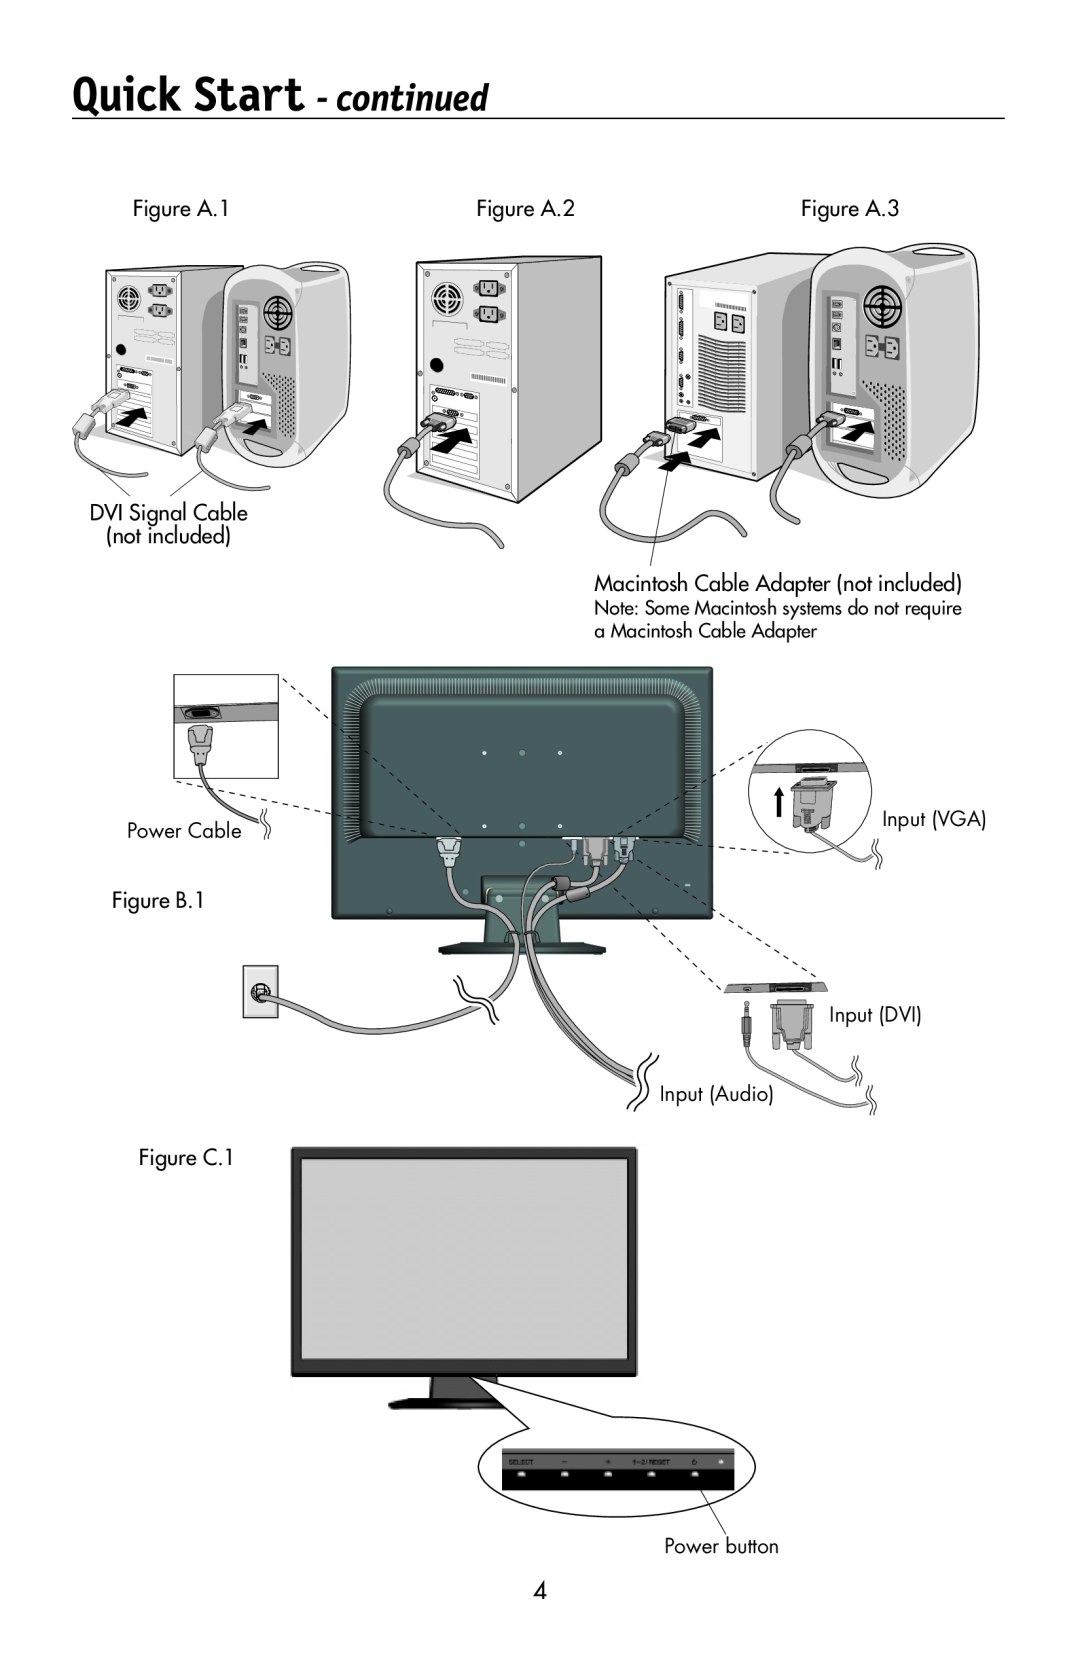 NEC LCD224WXM Quick Start - continued, Figure A.1, Figure A.2, Figure B.1, Figure C.1, Power Cable, Input DVI Input Audio 